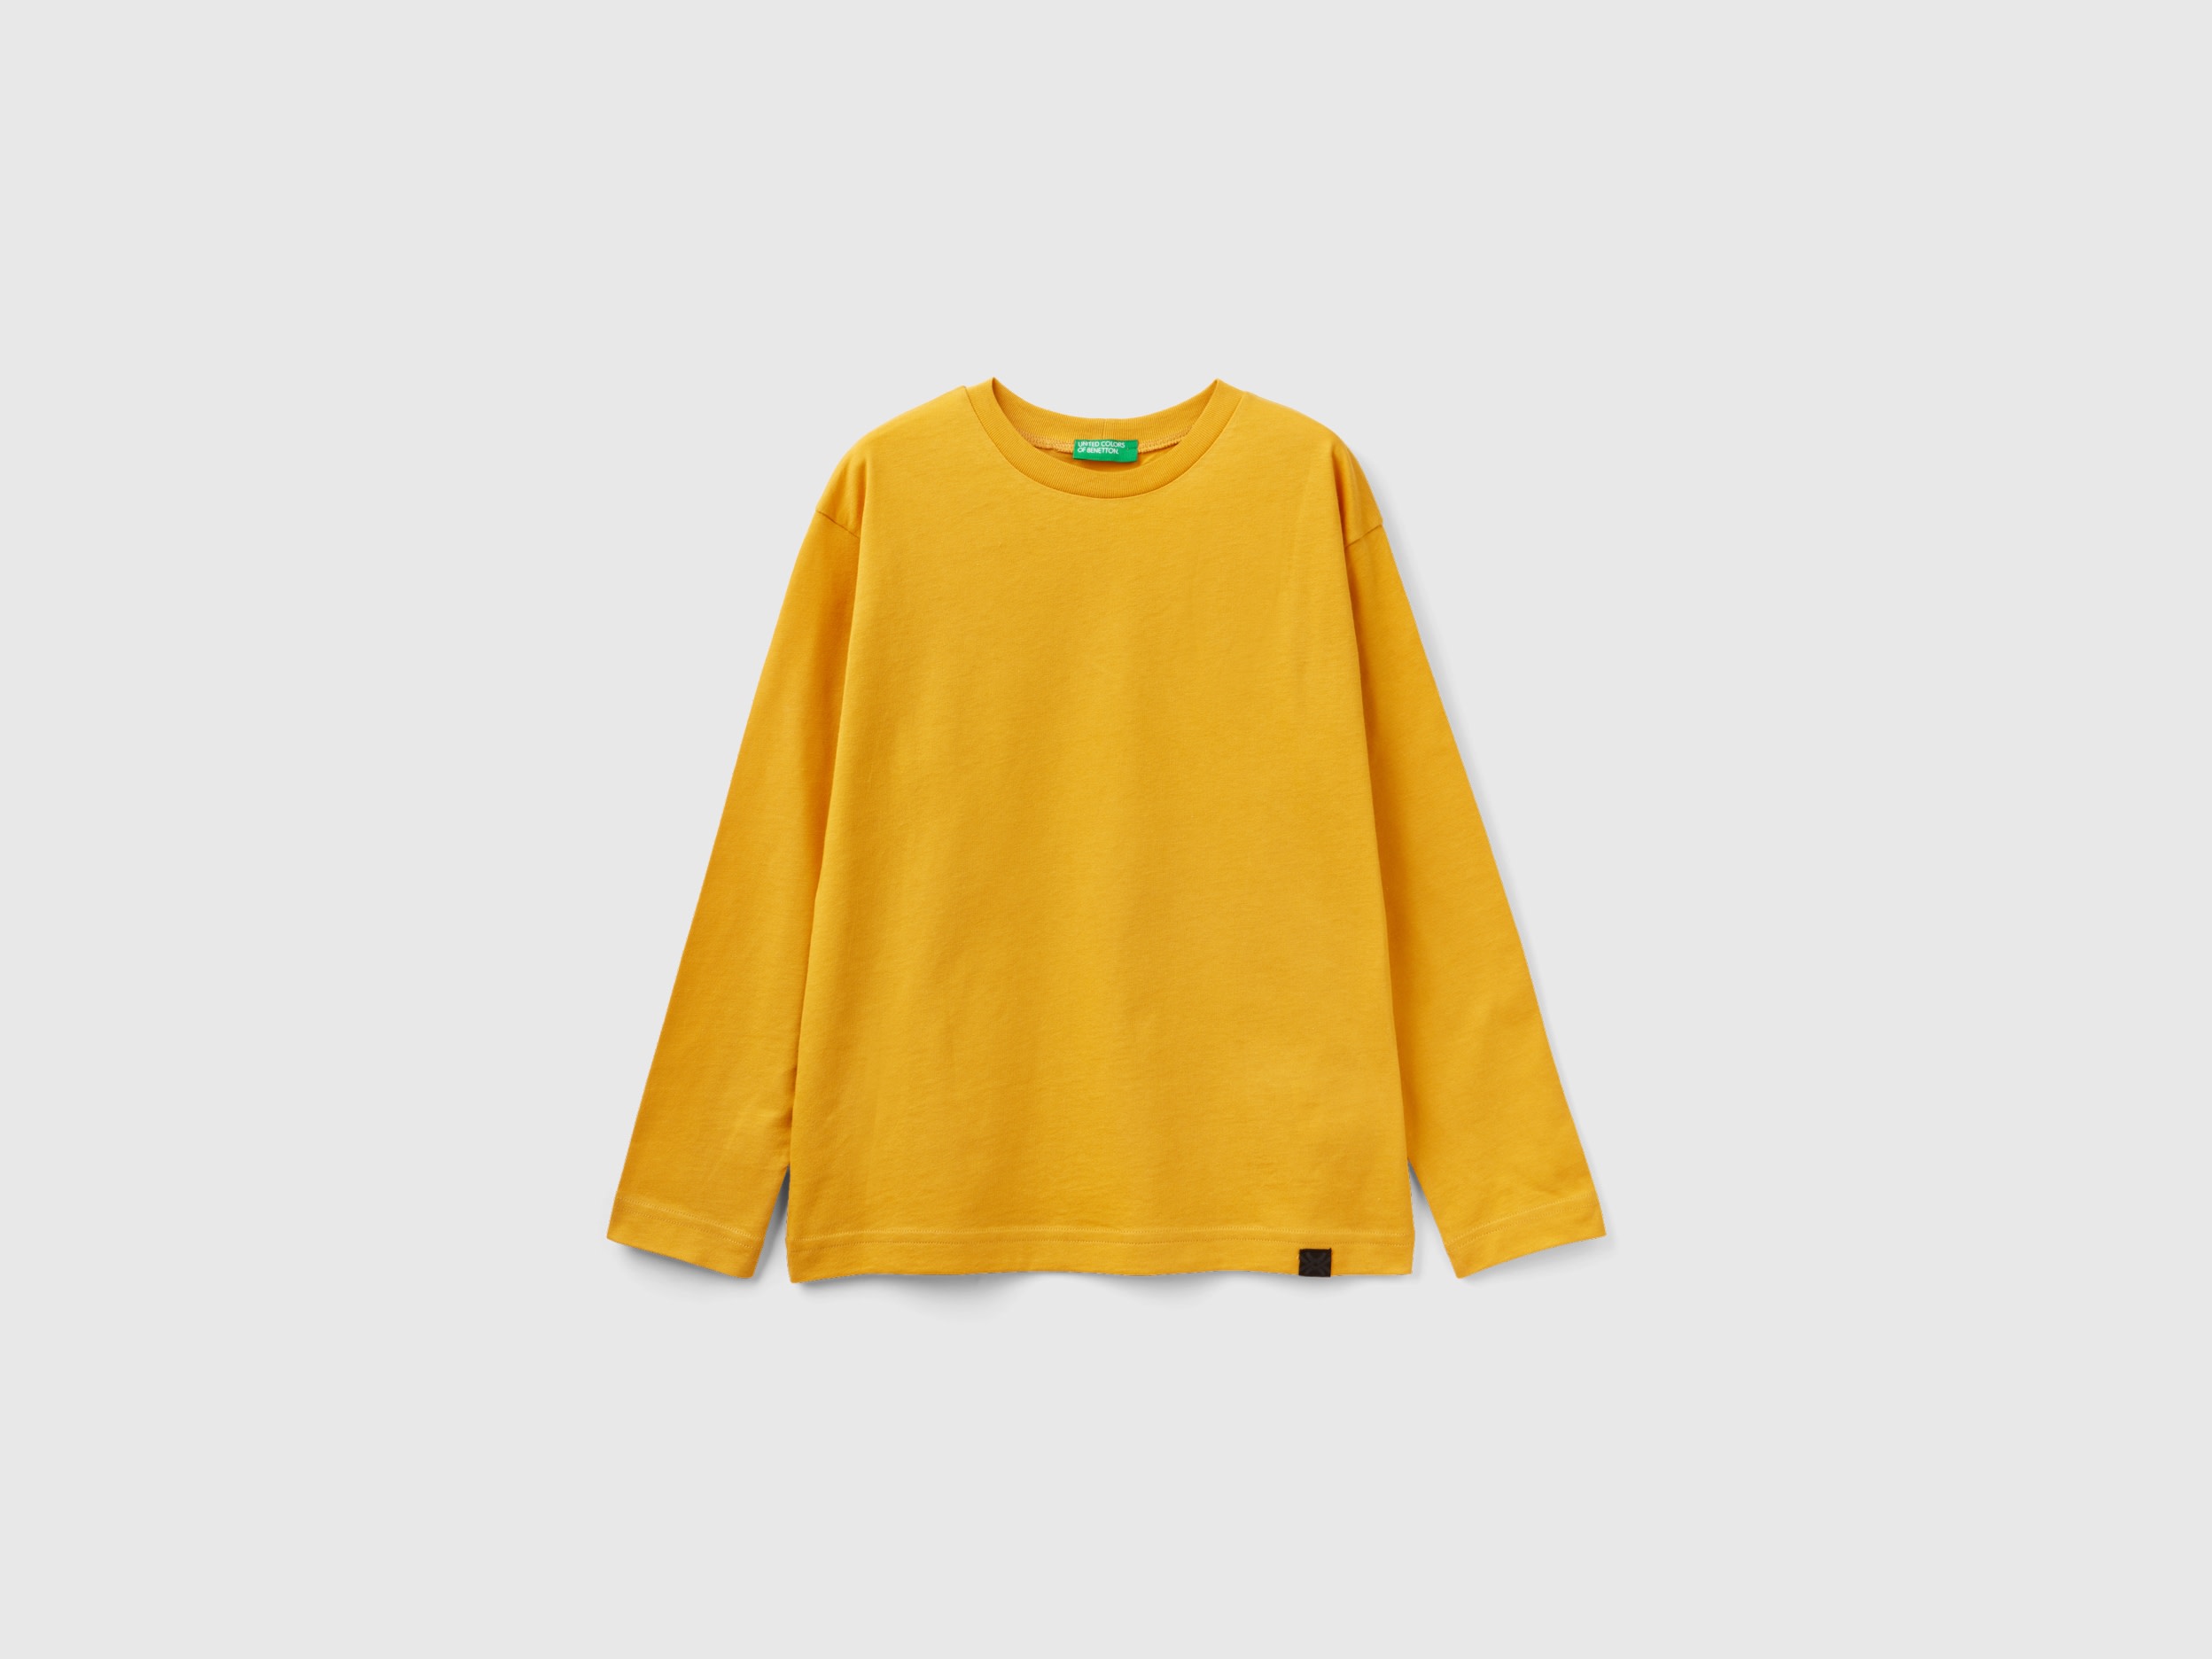 Benetton, 100% Organic Cotton Crew Neck T-shirt, size XL, Yellow, Kids